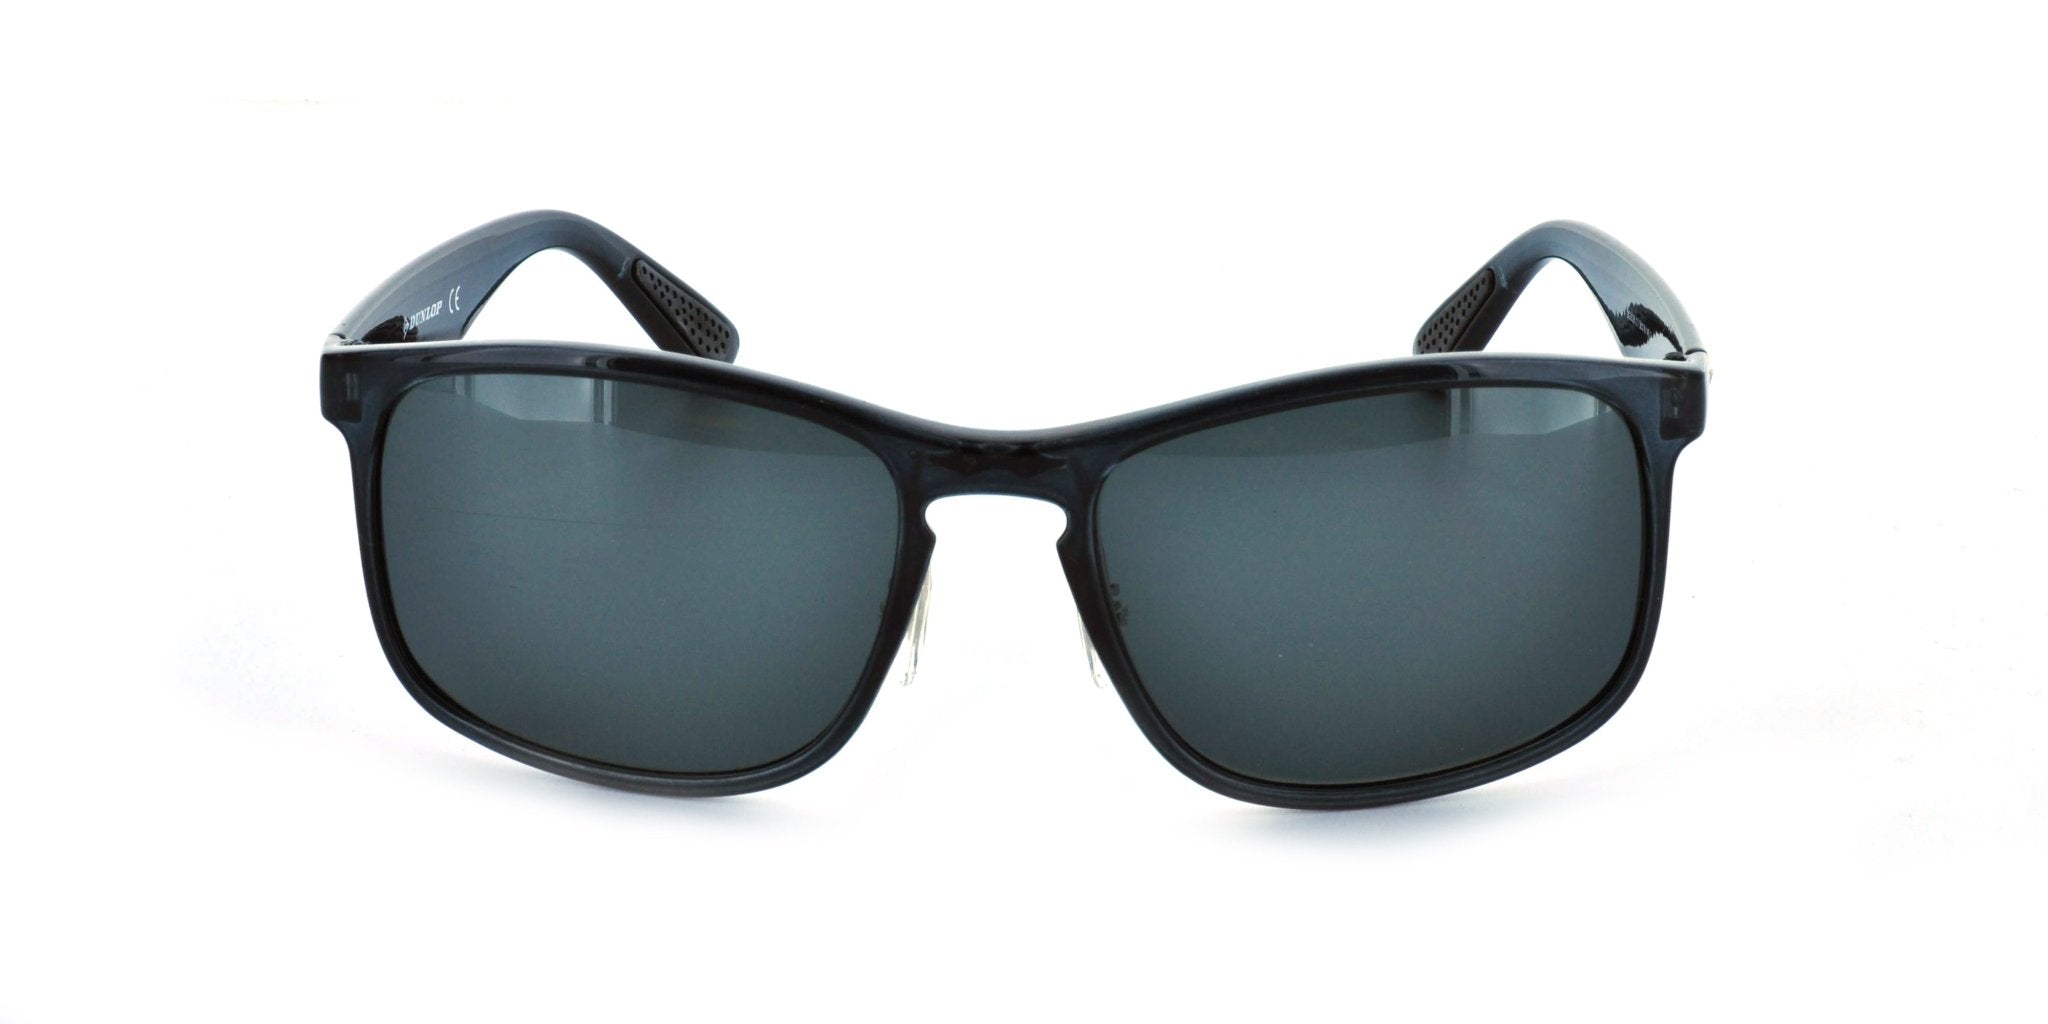 Takreem Dunlop DG-3529-C1 Men's Sunglasses - Elevate Your Style with UV Protection - #shoTakreem Dunlop DG-3529-C1 Men's Sunglasses - Elevate Your Style with UV Protectionp_name#Takreem Dunlop DG-3529-C1 Men's Sunglasses - Elevate Your Style with UV ProtectionSunglassesDunlopTakreem.joDG 3529 c1BlackAcetateMenTakreem Dunlop DG-3529-C1 Men's Sunglasses - Elevate Your Style with UV Protection - Takreem.jo